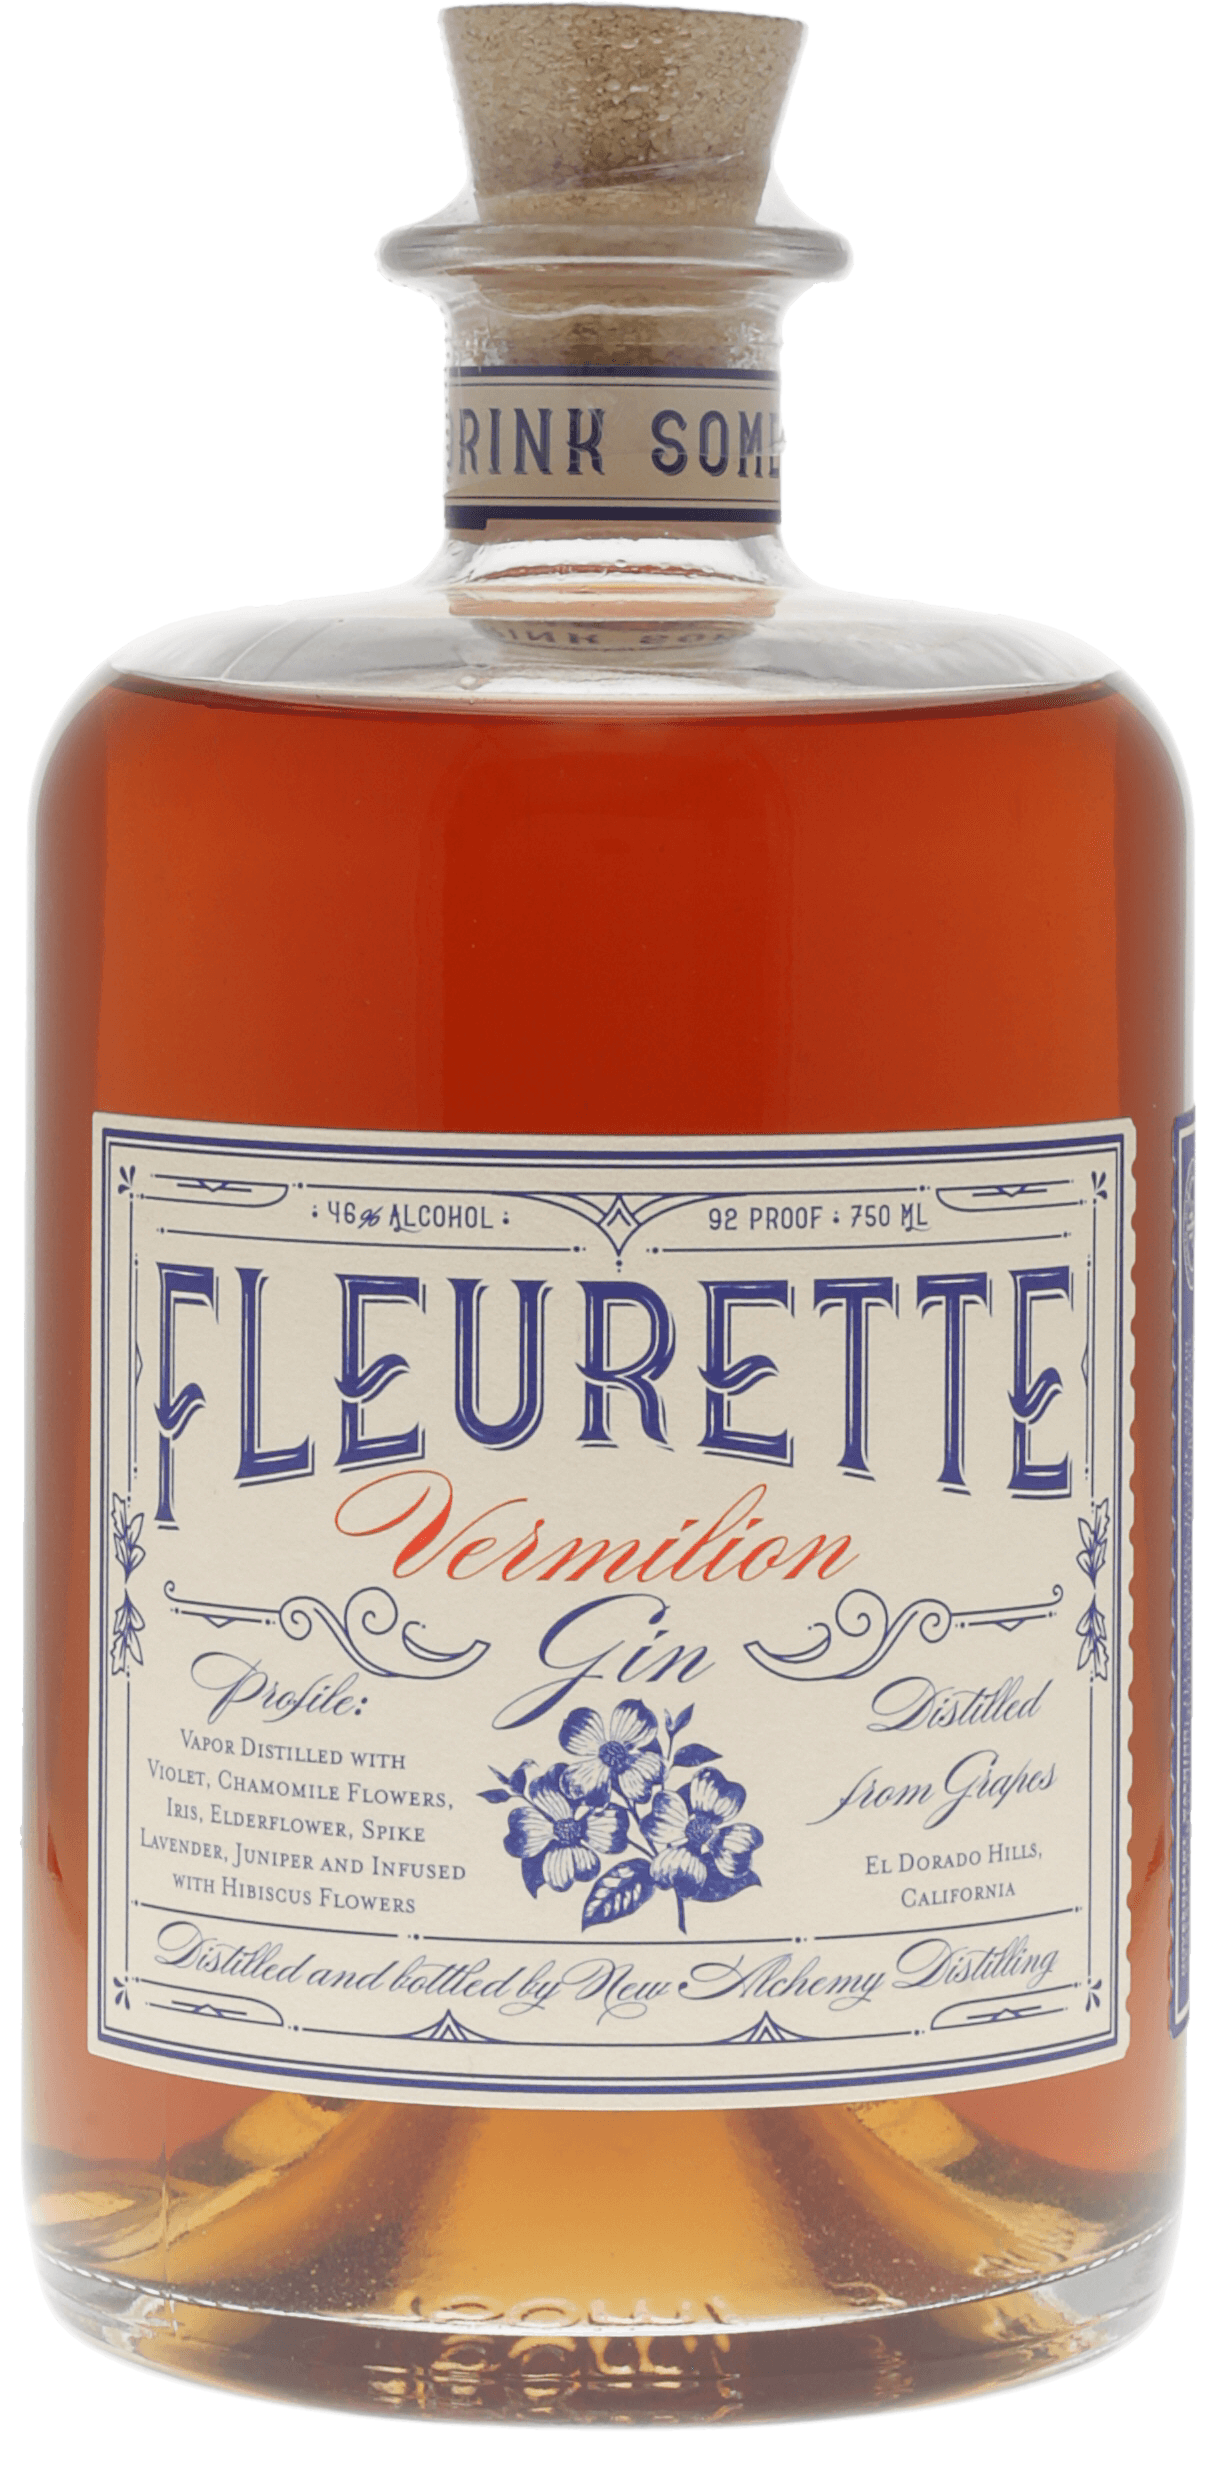 Fleurette Vermilion Gin